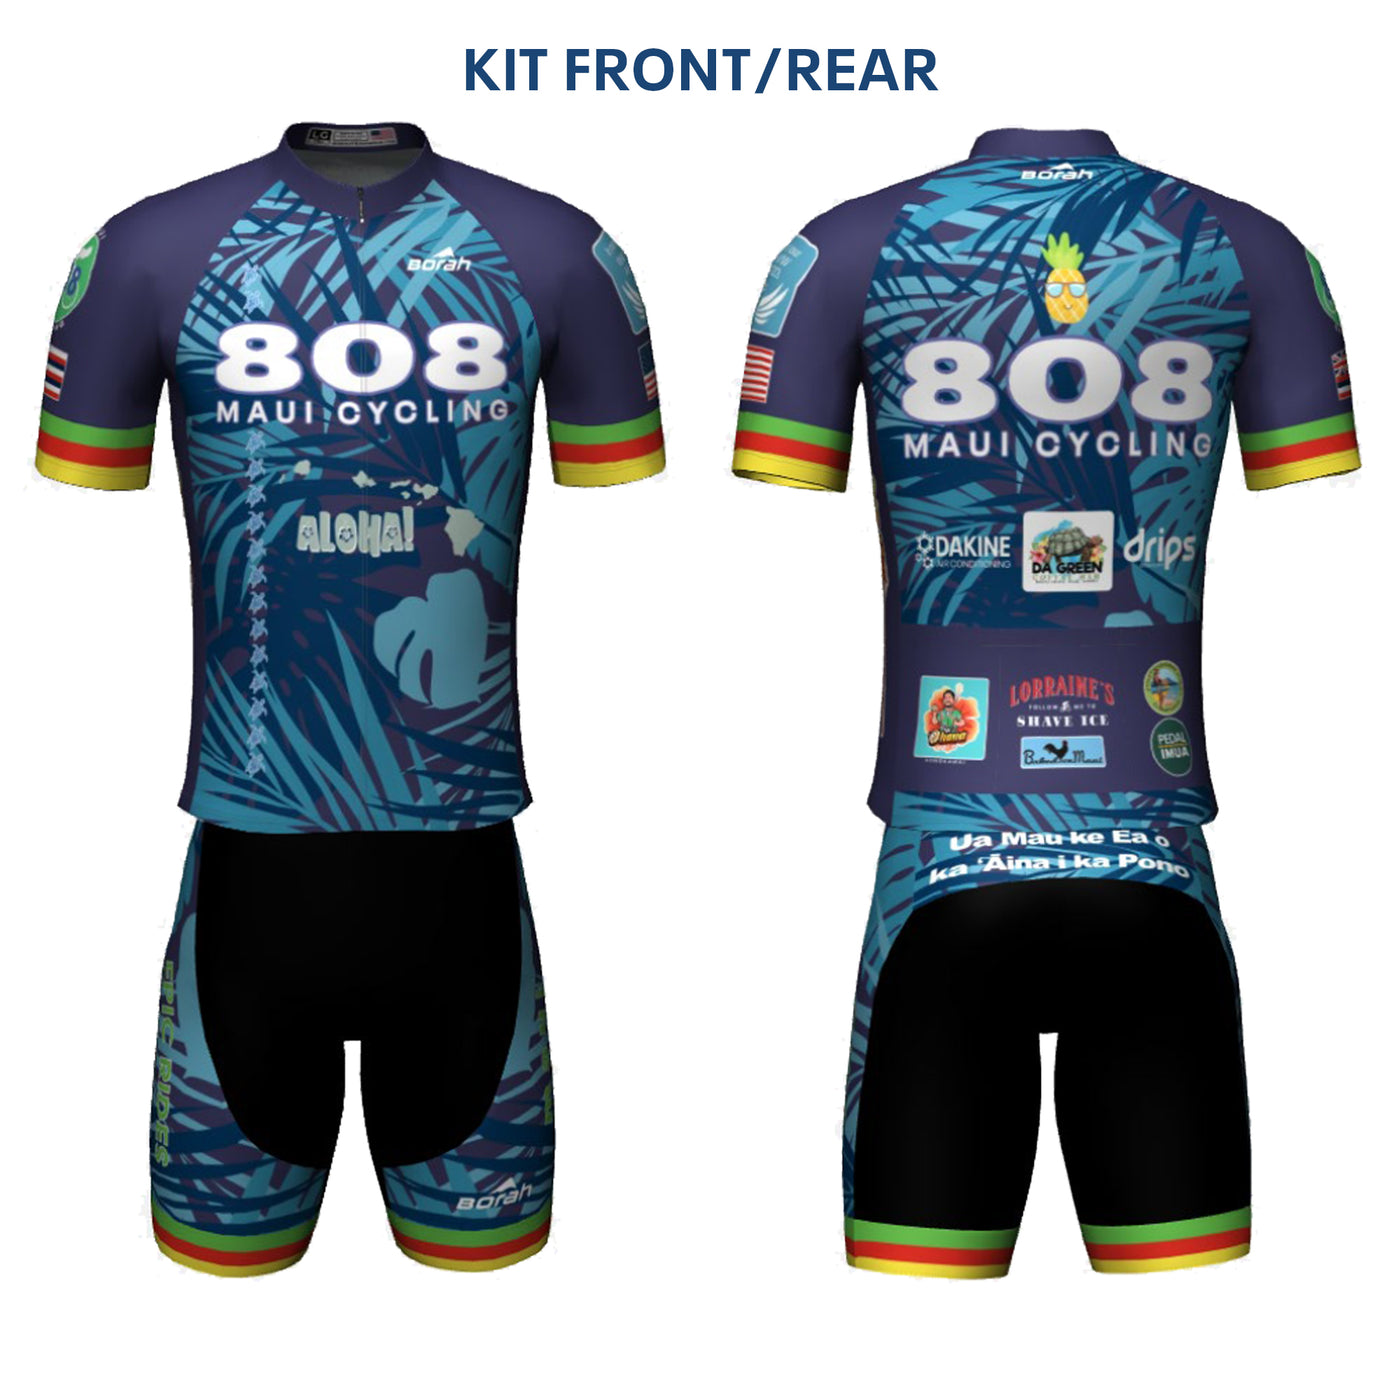 808 Maui Cycling Complete Kit